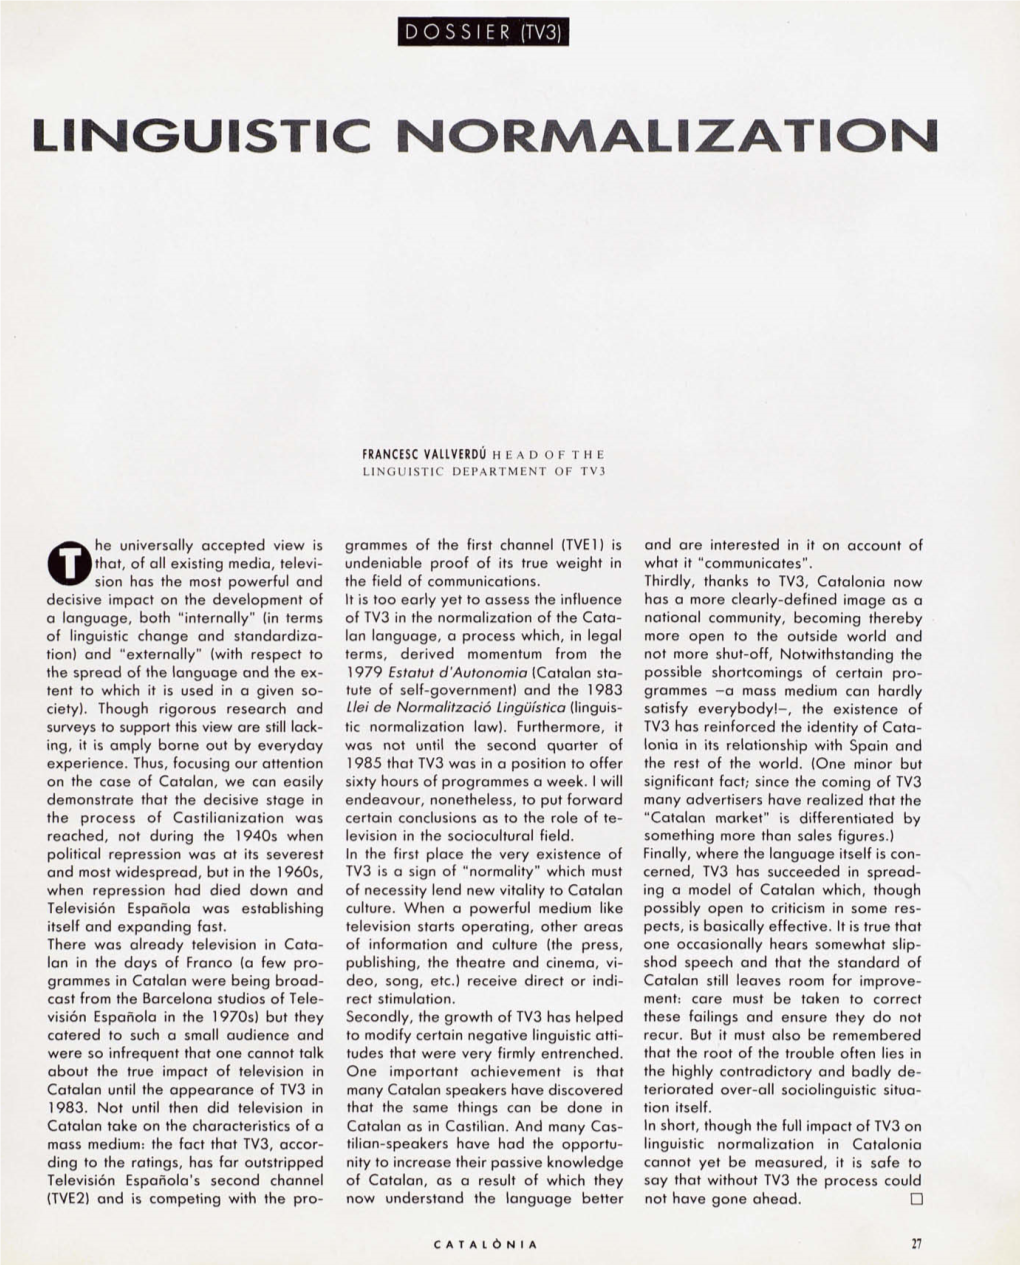 Linguistic Normalization